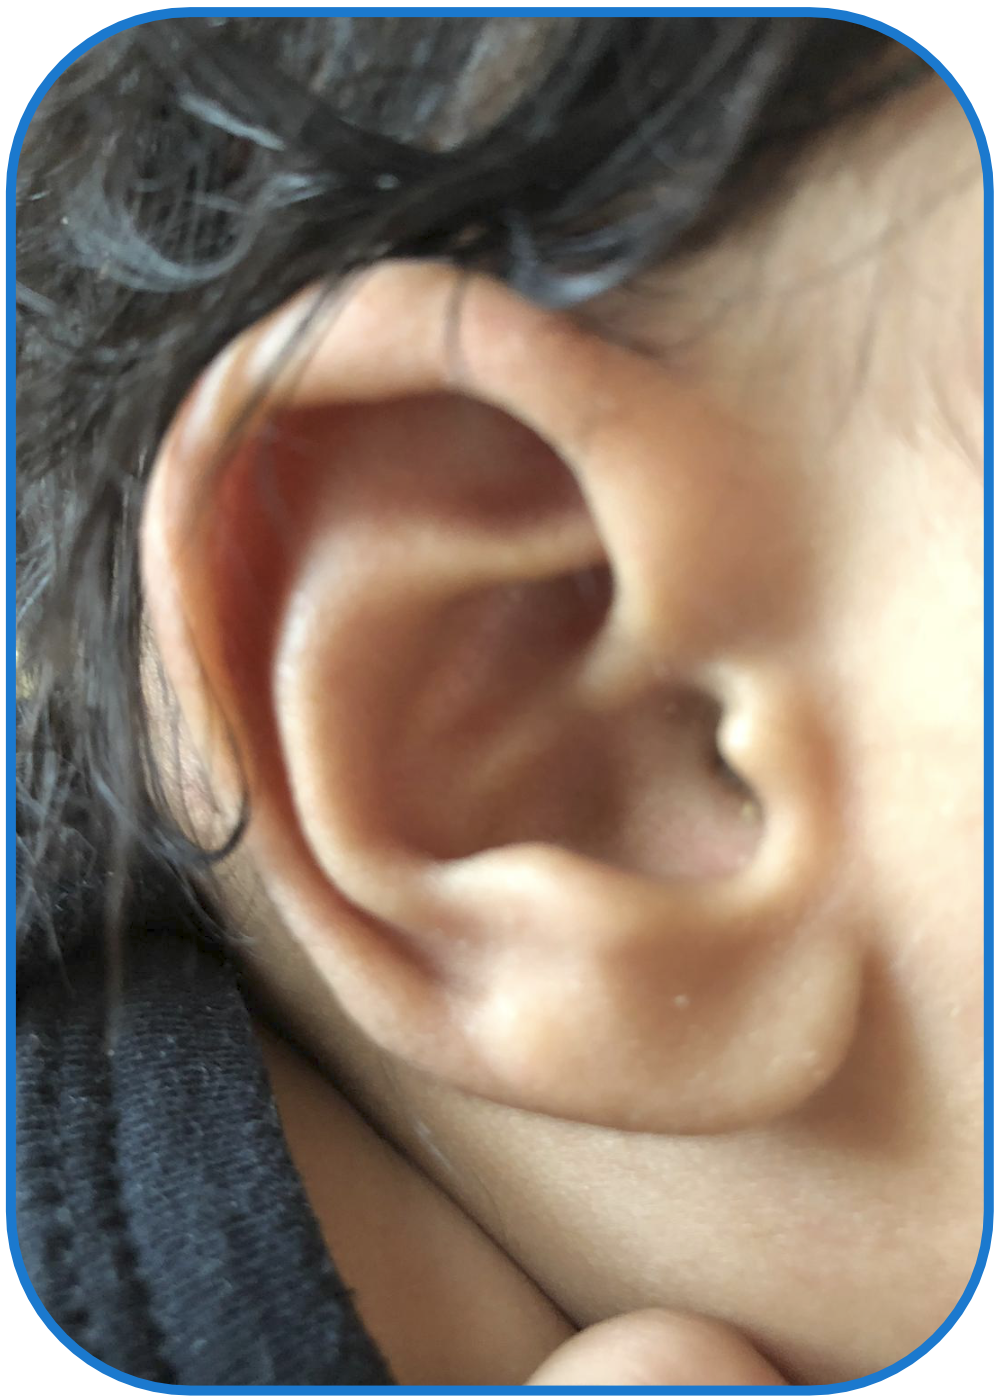 Ear Buddies Results